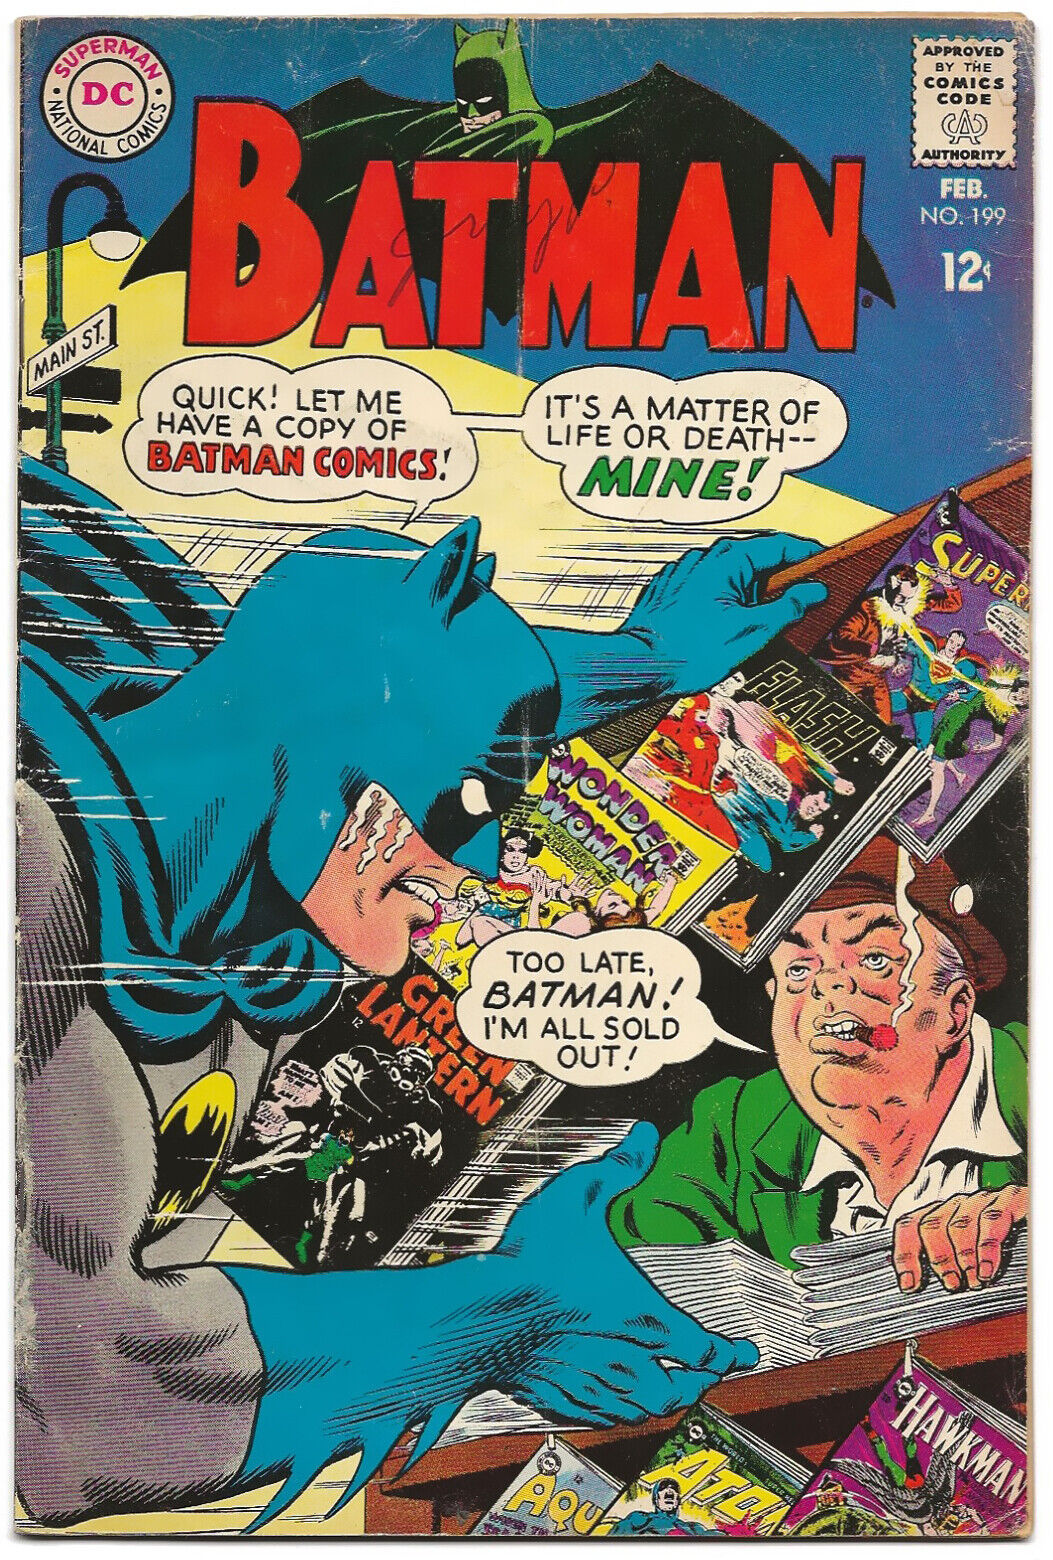 Batman #199 (1968) Silver Age Batman vs. Comic Book Writer/Artist Master Crook